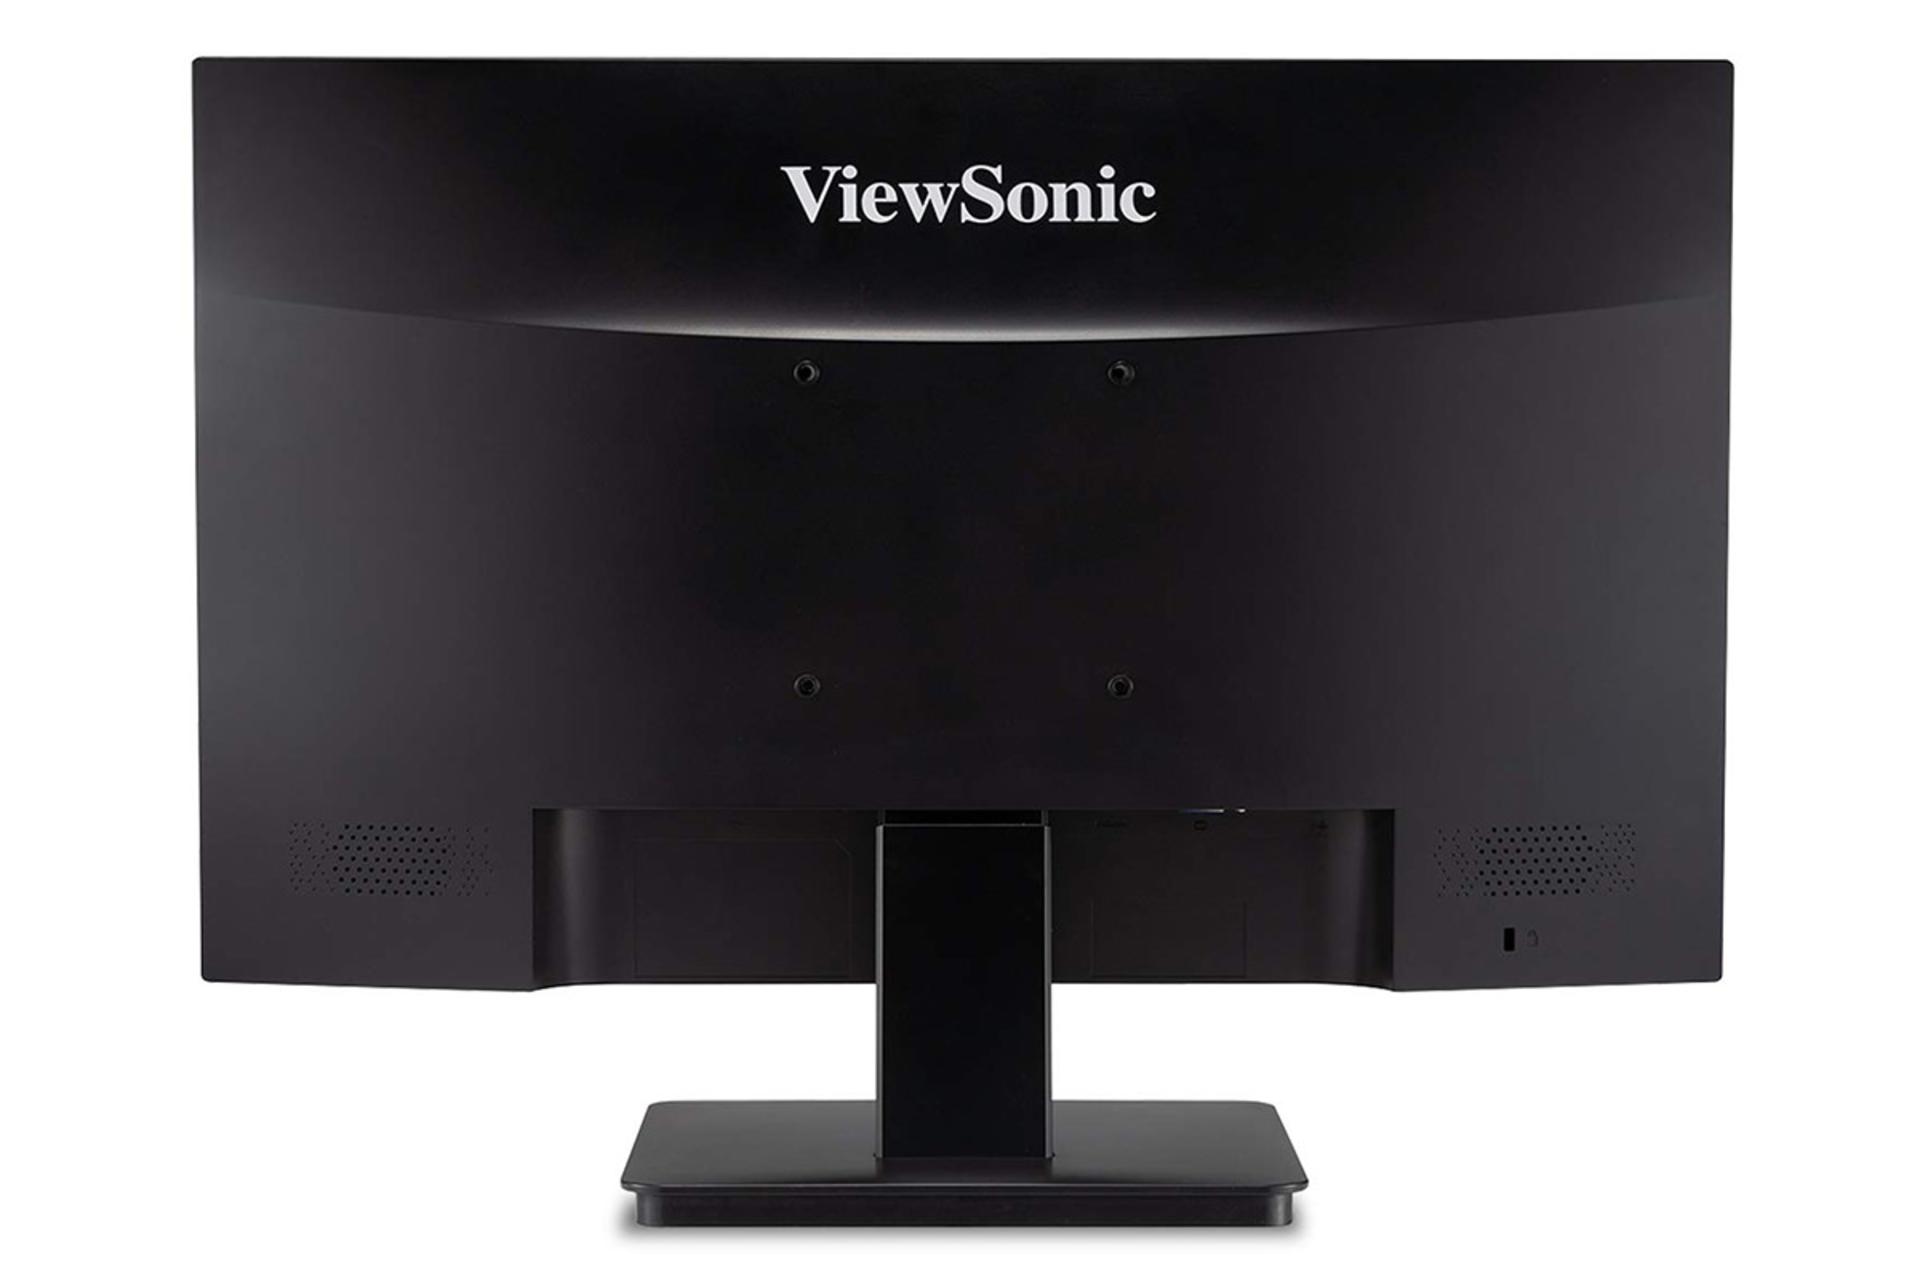 مانیتور ویوسونیک 21.5 اینچ VS2210-h / ViewSonic VS2210-h